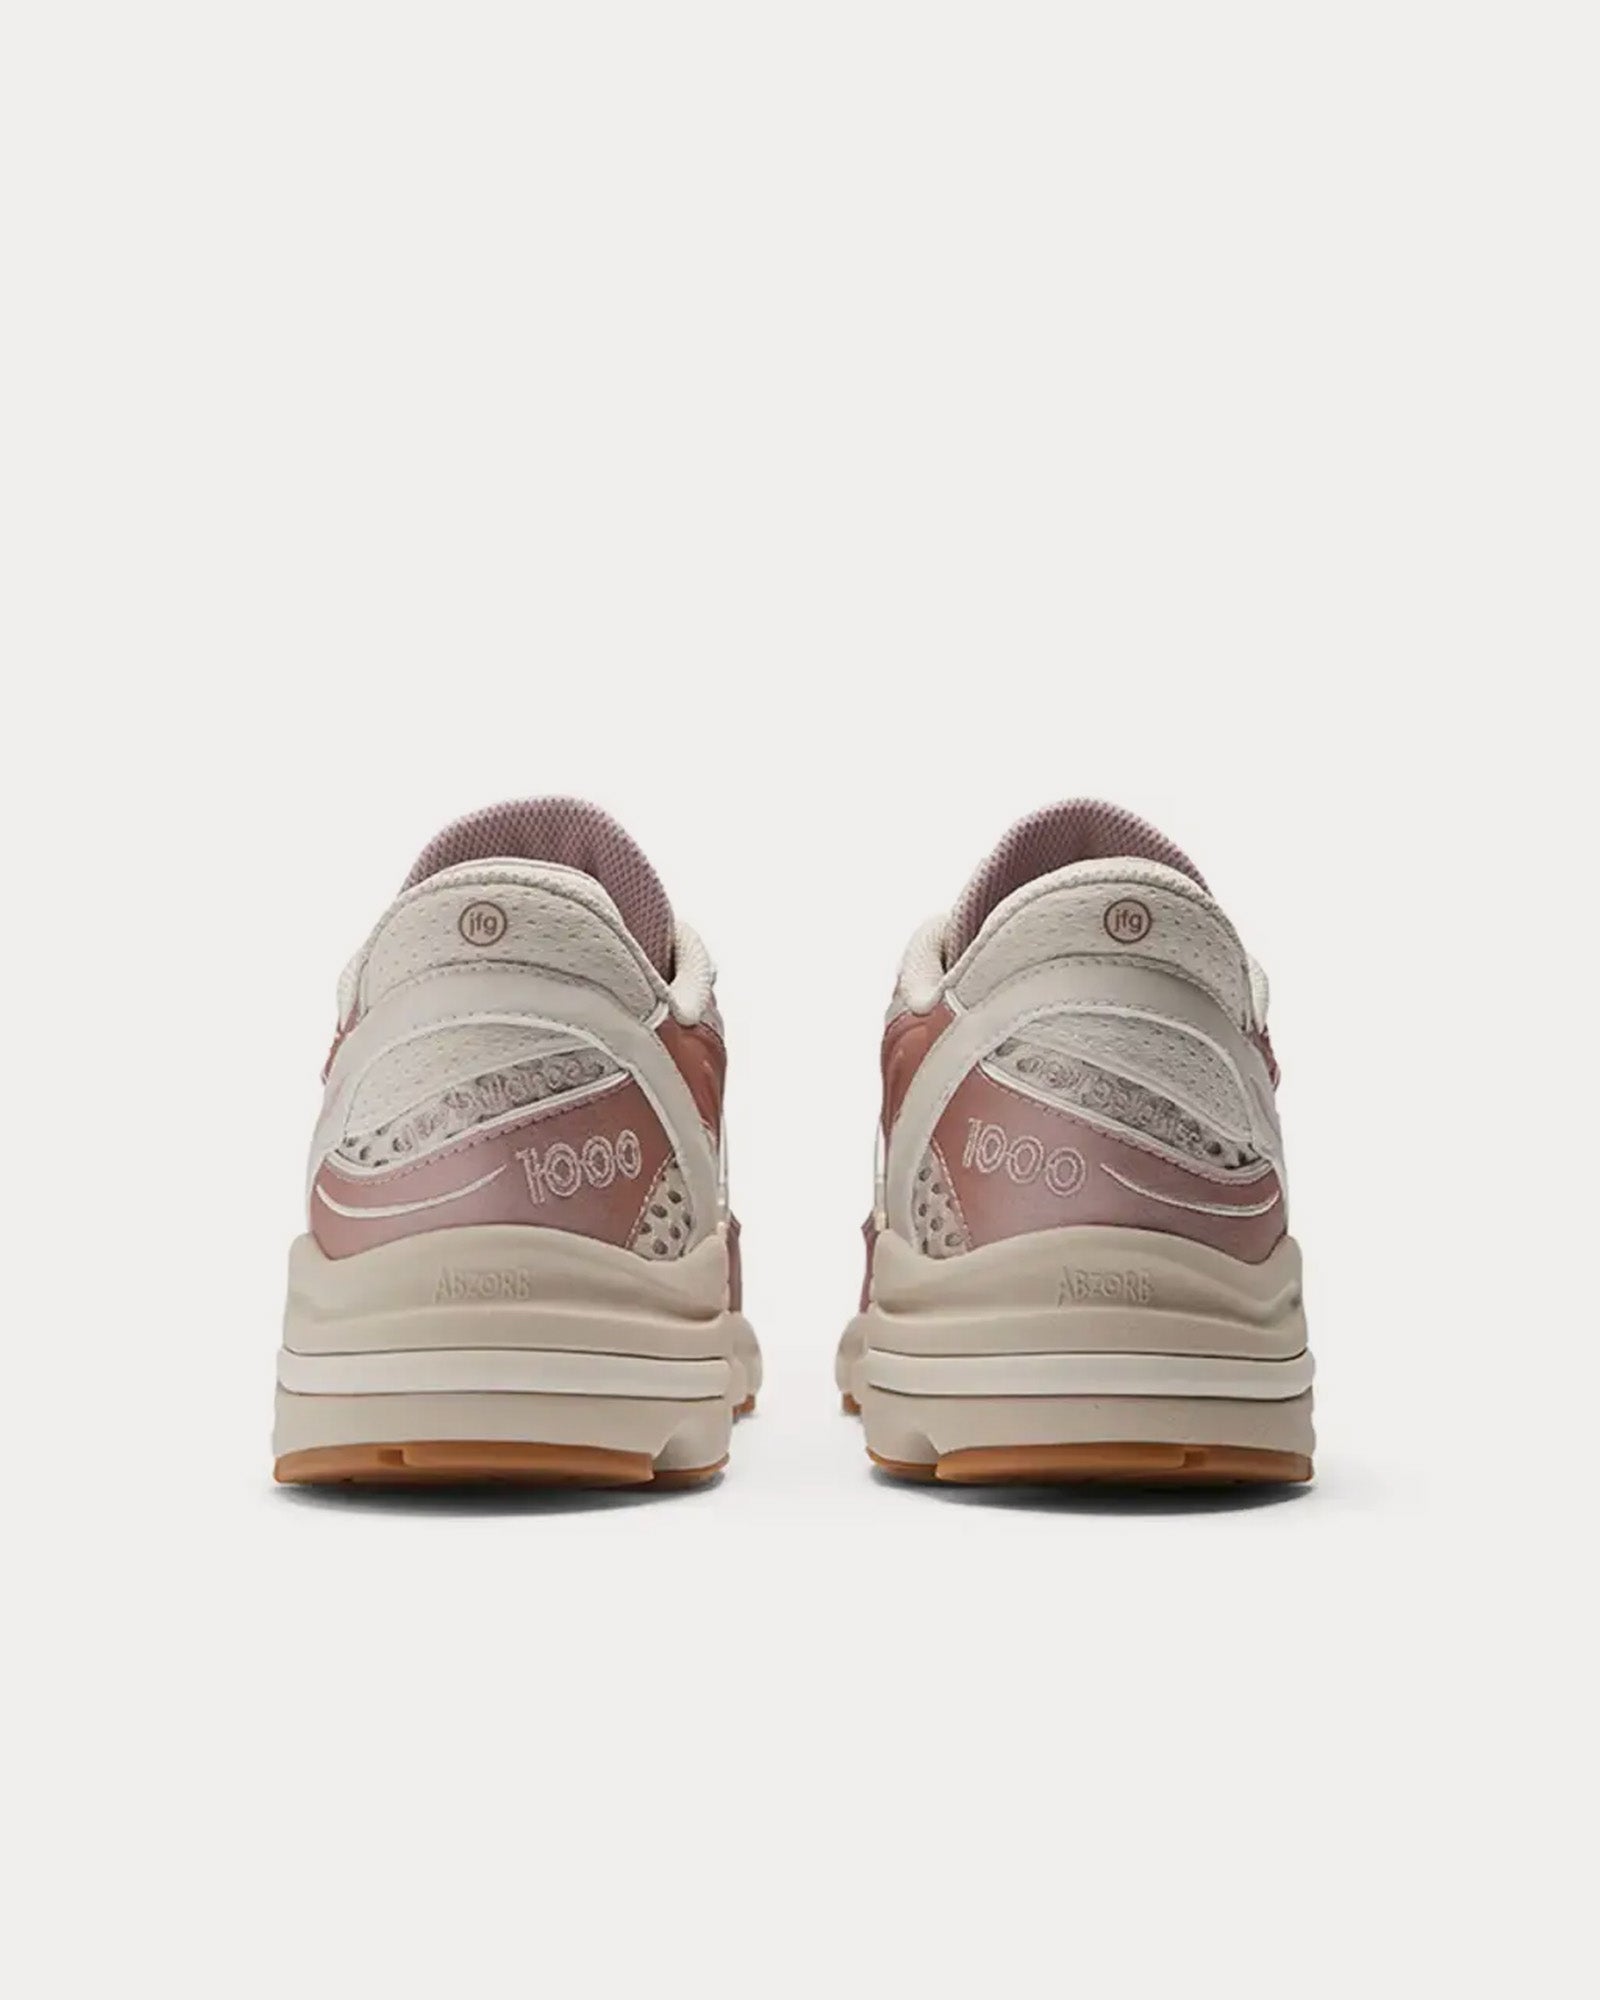 New Balance x Joe Freshgoods - 1000 Pink / Mink Low Top Sneakers